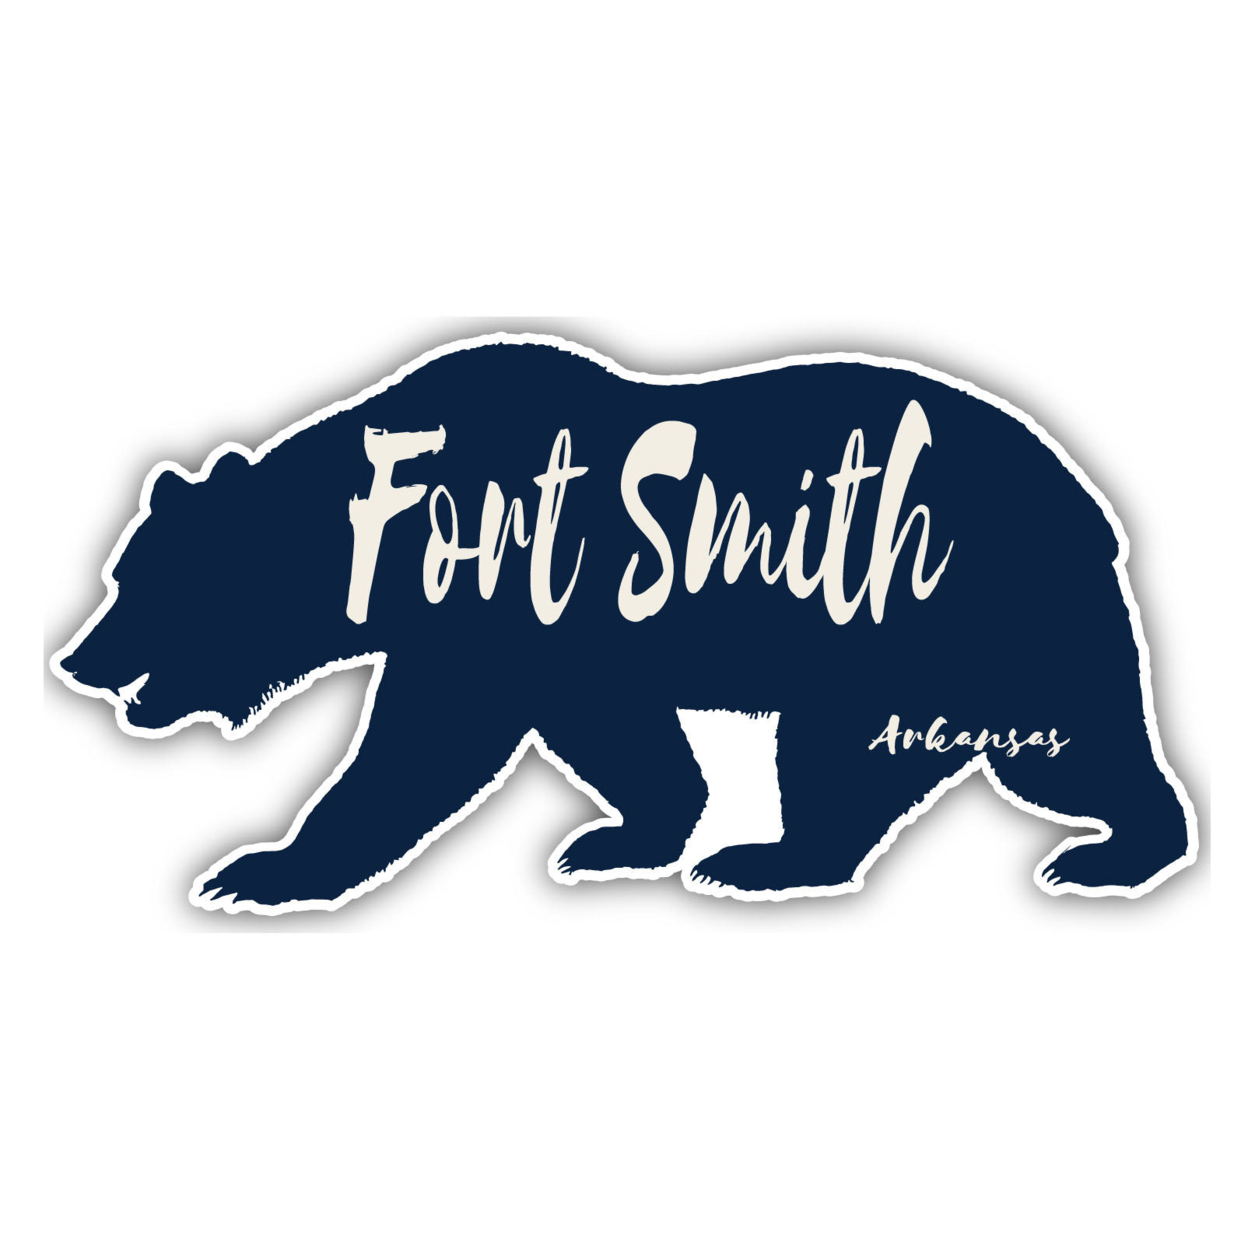 Fort Smith Arkansas Souvenir Decorative Stickers (Choose Theme And Size) - Single Unit, 8-Inch, Bear